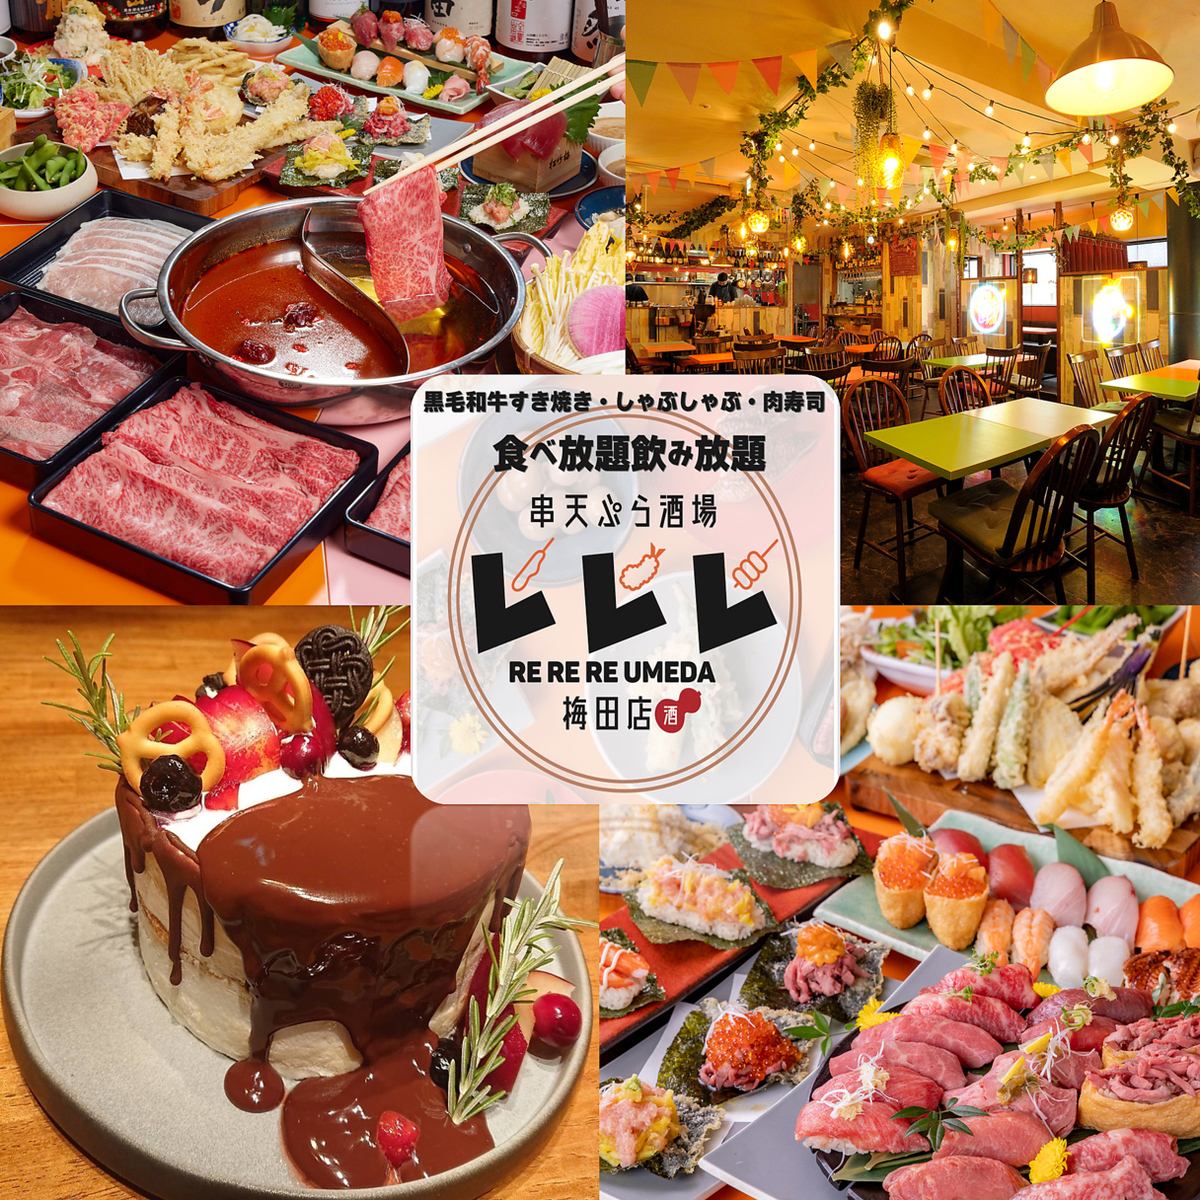 Meat sushi, seafood sushi, A5-rank Japanese black beef shabu-shabu, sukiyaki all-you-can-eat and drink!